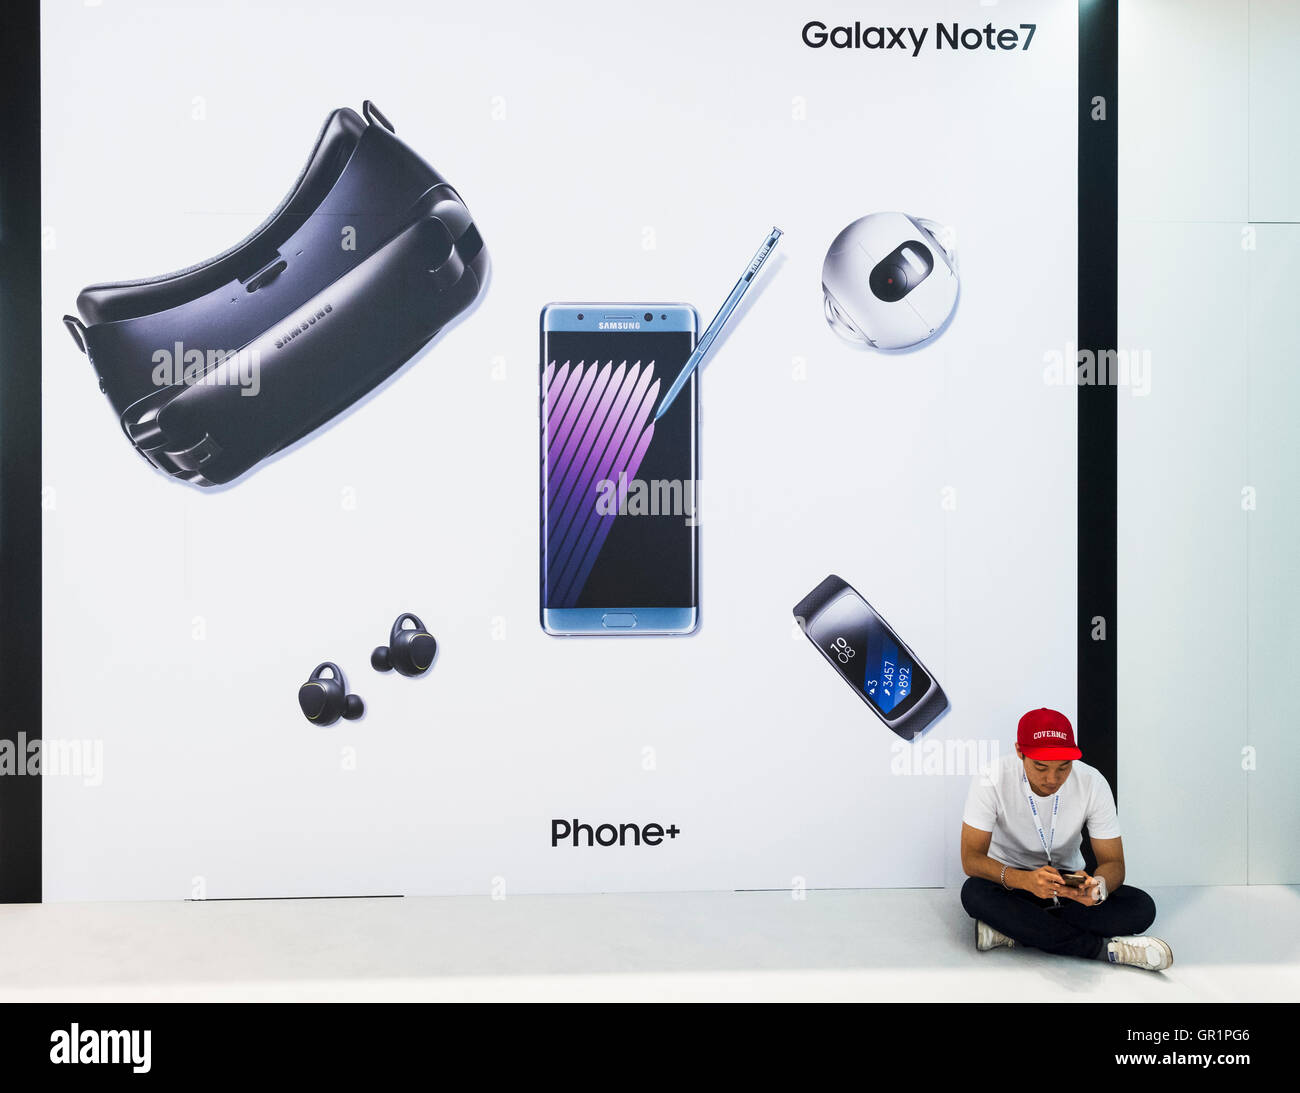 Galaxy Note 7 display at Samsung stand at 2016  IFA (Internationale Funkausstellung Berlin), Berlin, Germany Stock Photo